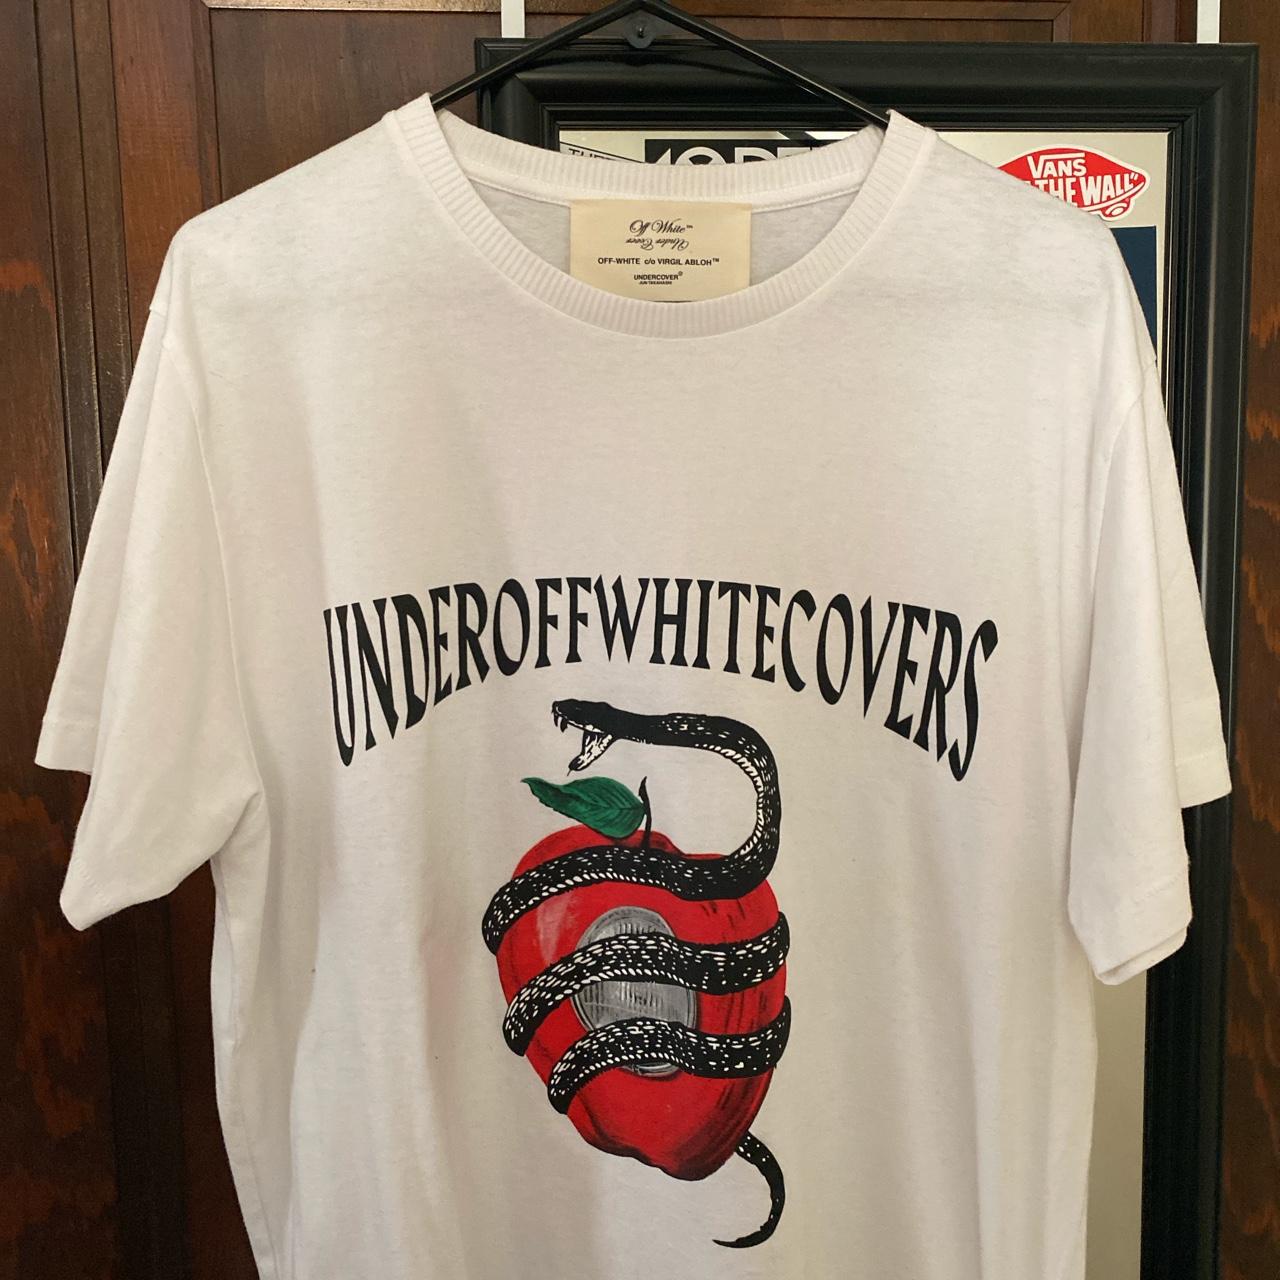 Off-White “UnderOffWhiteCovers” Apple T-Shirt, Worn